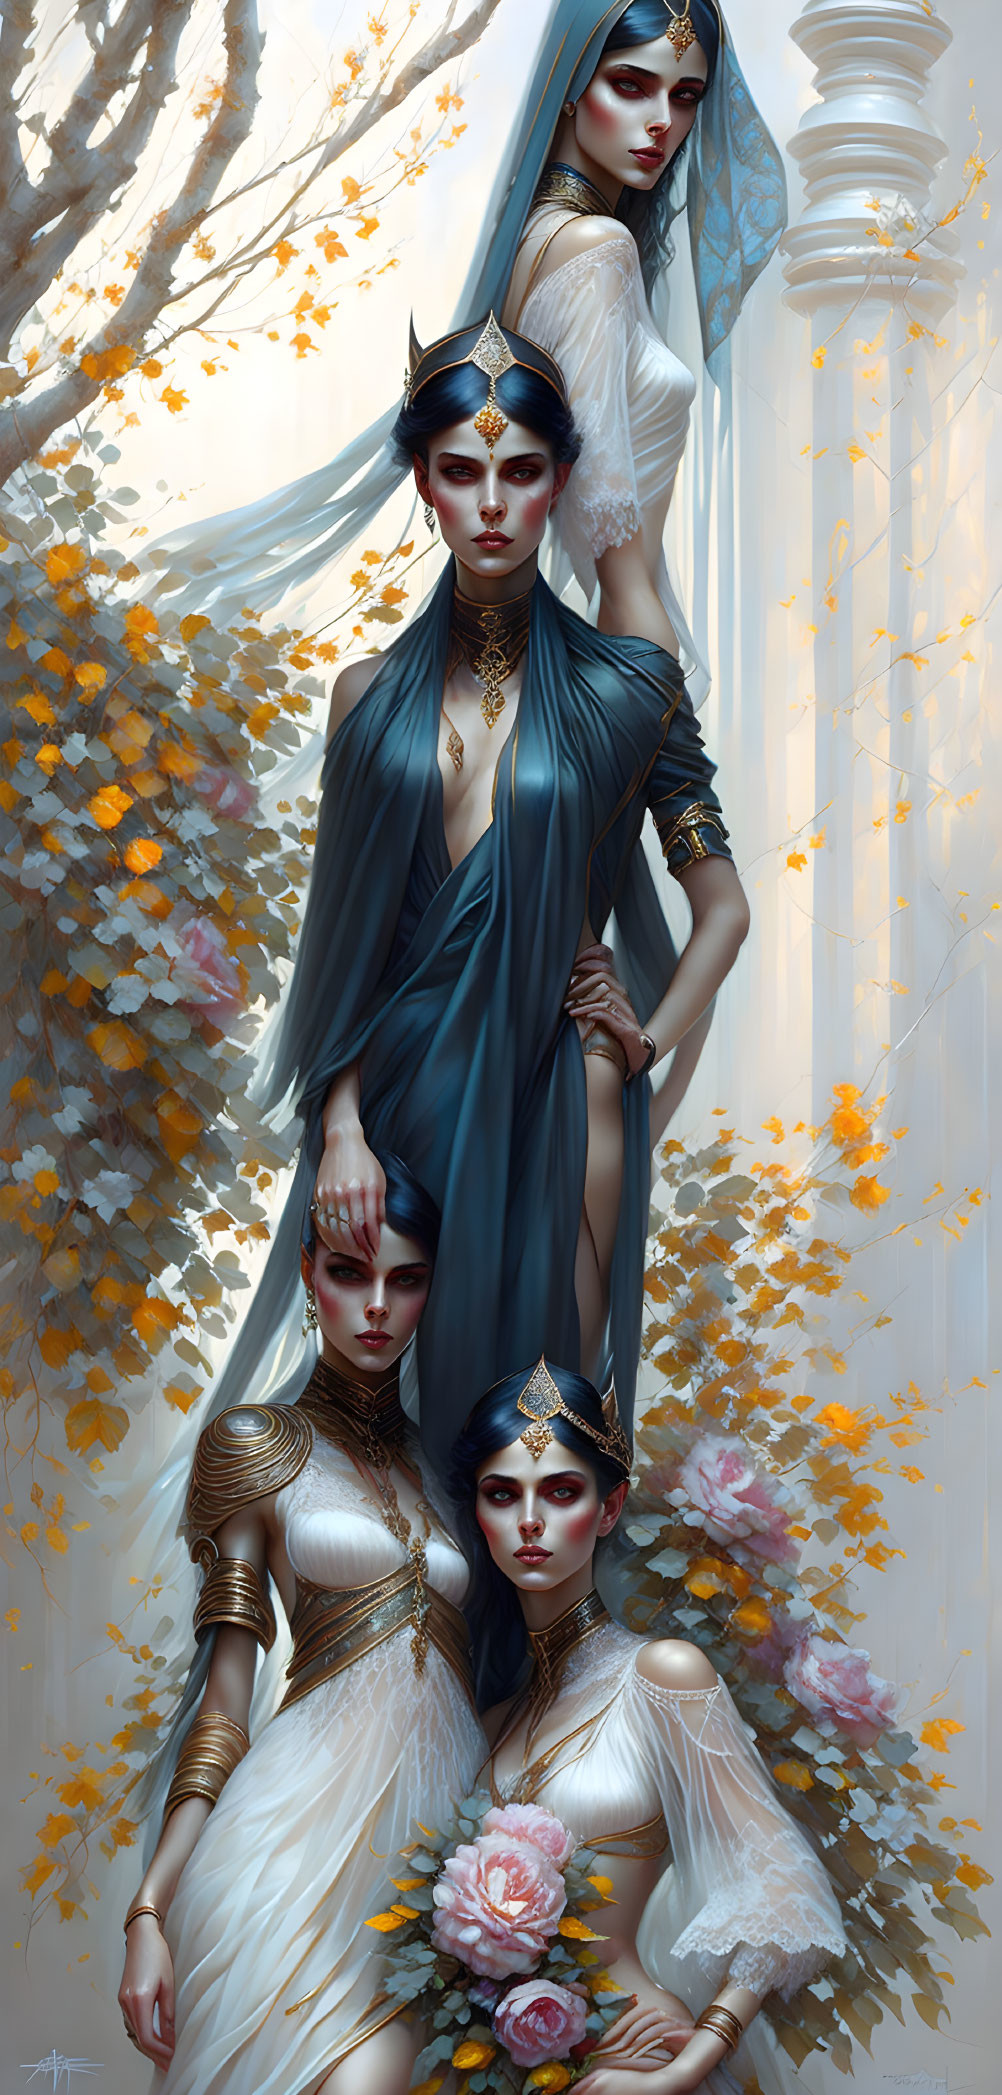 Three Elegant Fantasy Women in Ornate Attire Among Autumnal Trees